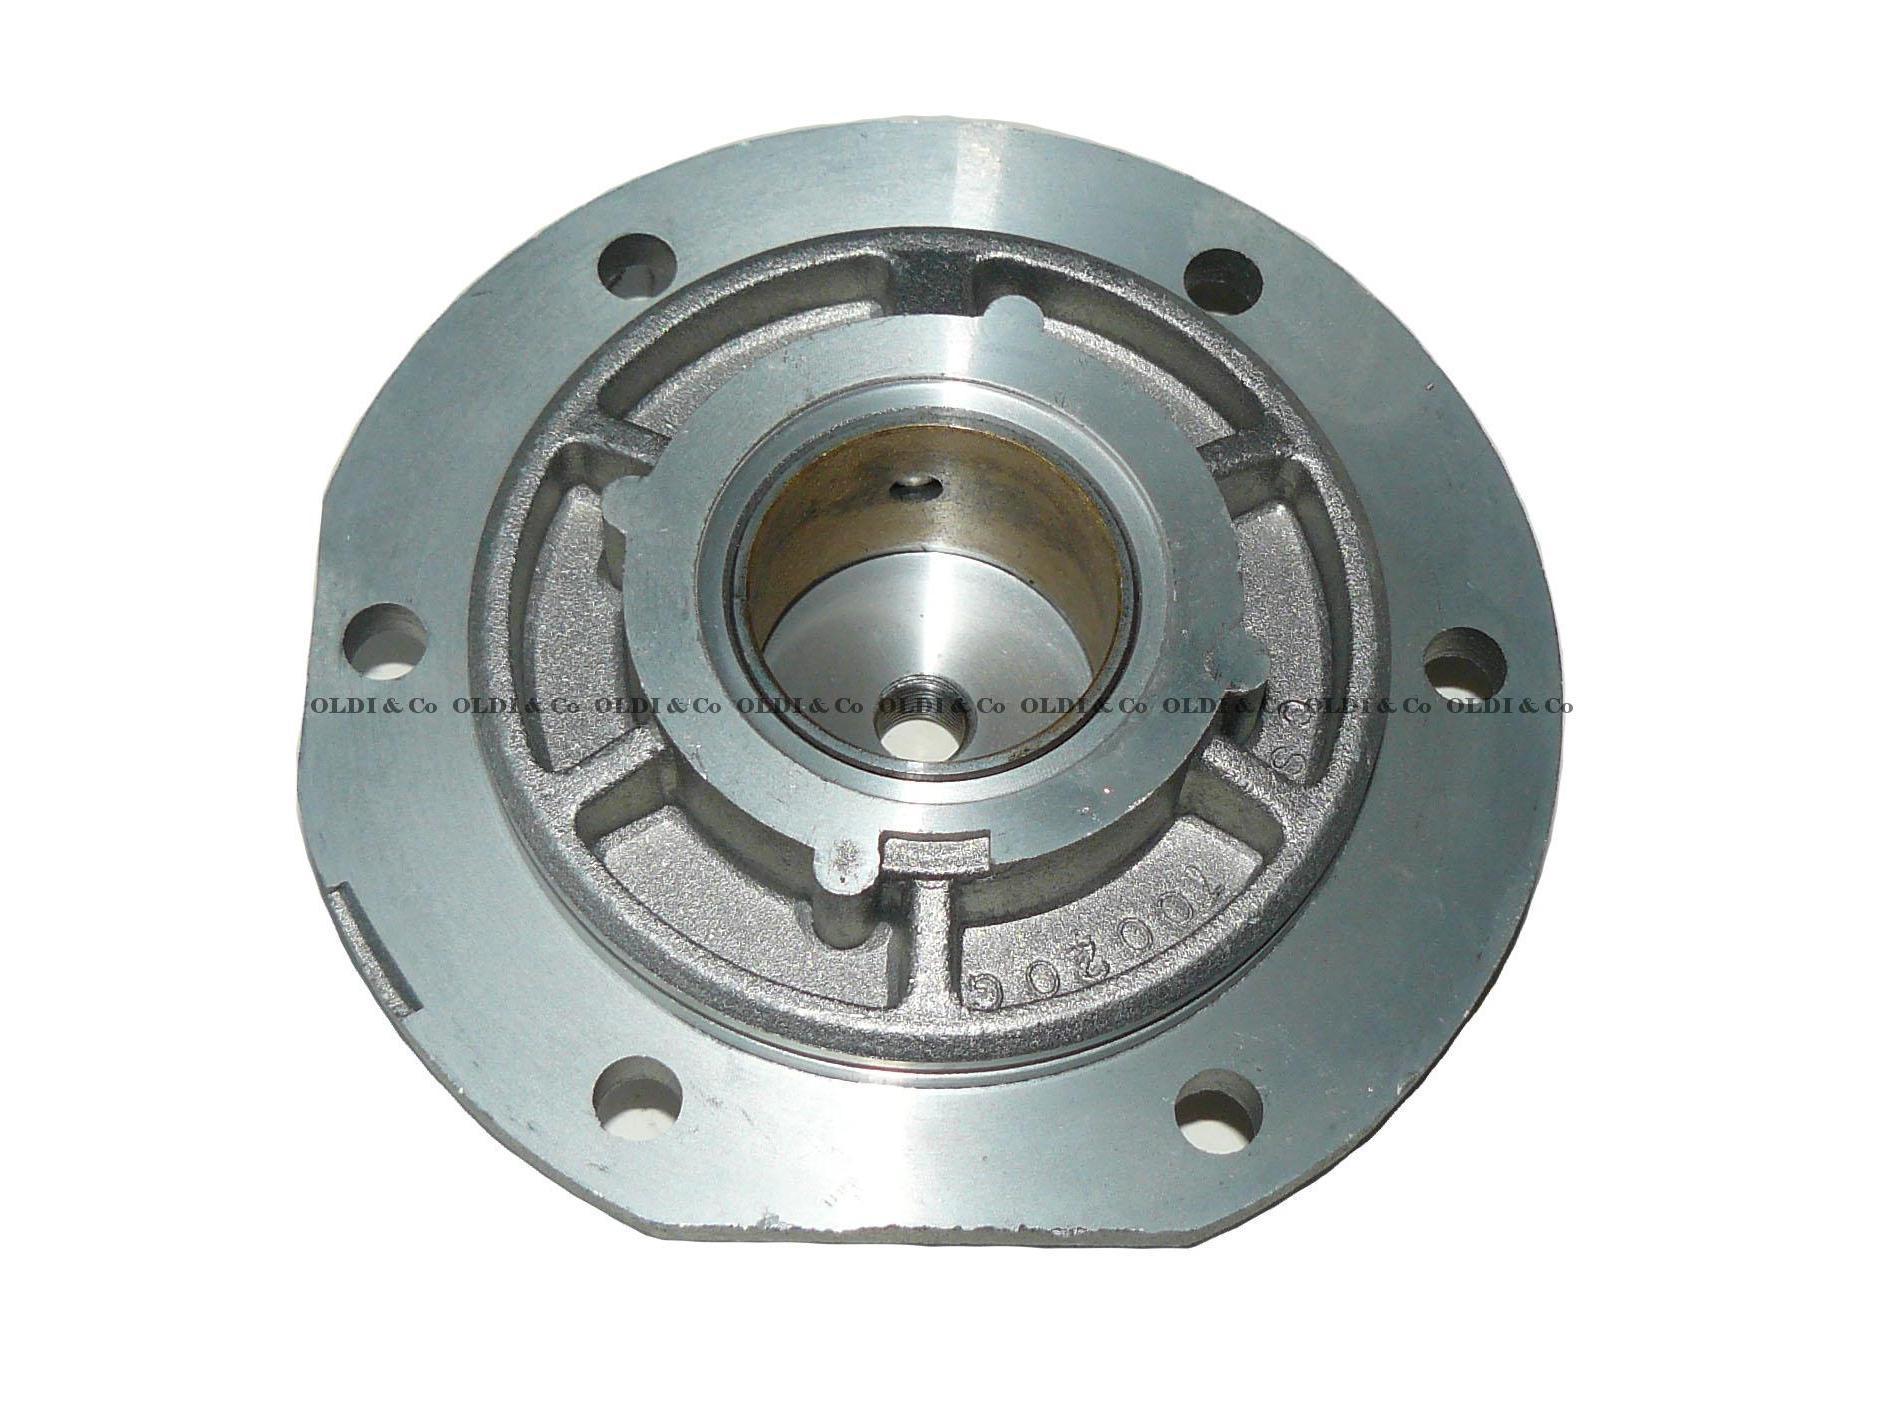 37.004.00278 Pneumatic system / valves → Compressor back cover